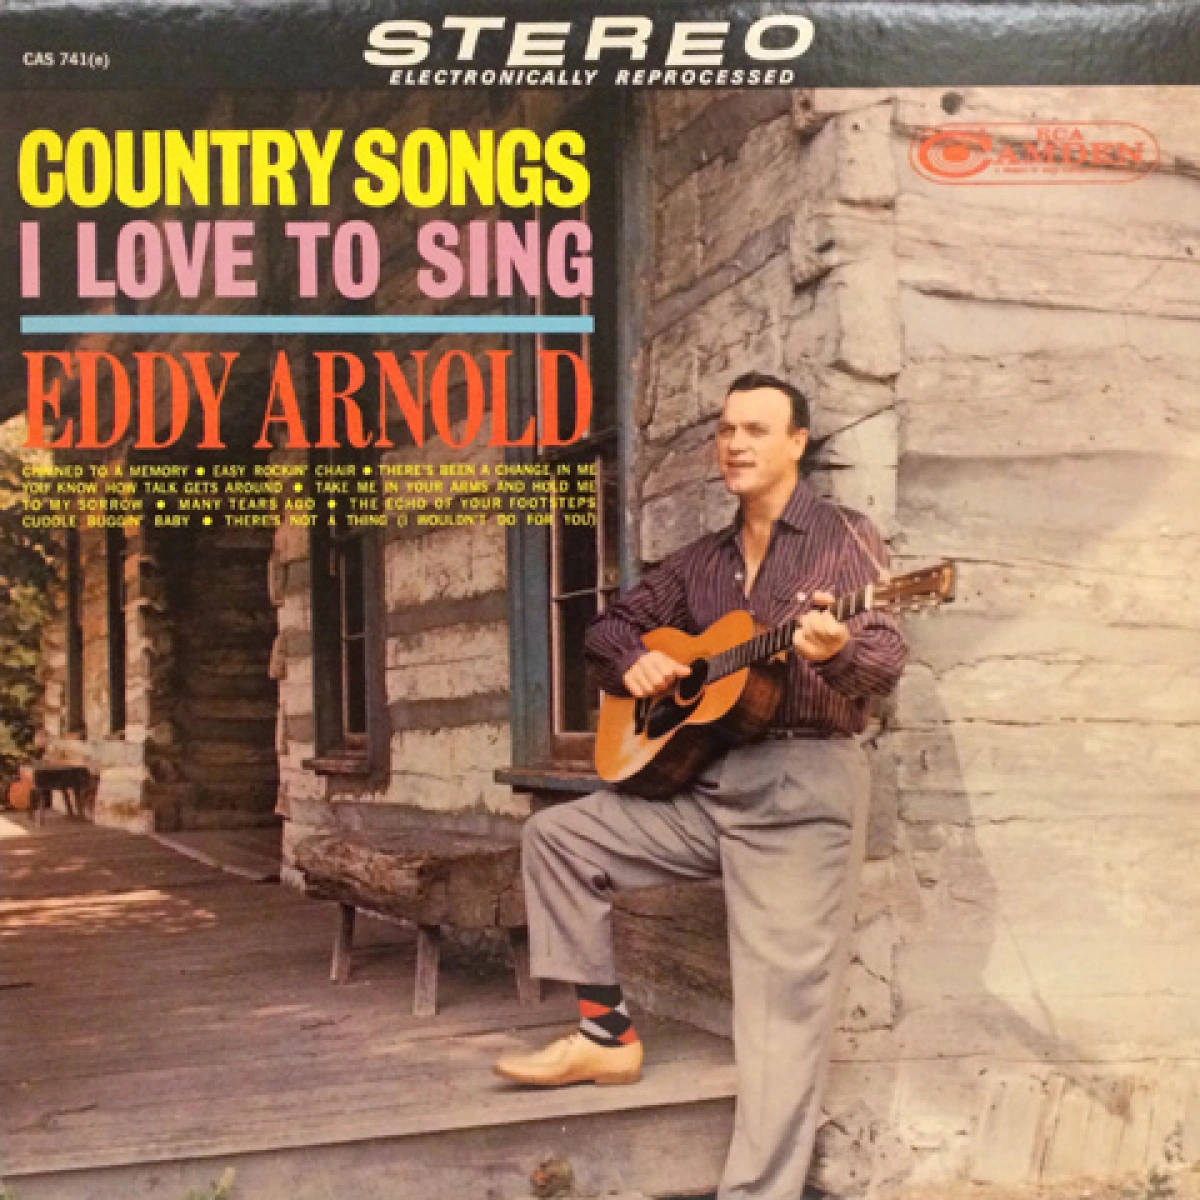 Eddyarnold Country Songs, Das Albumcover, Das Ich Gerne Singe. Wallpaper